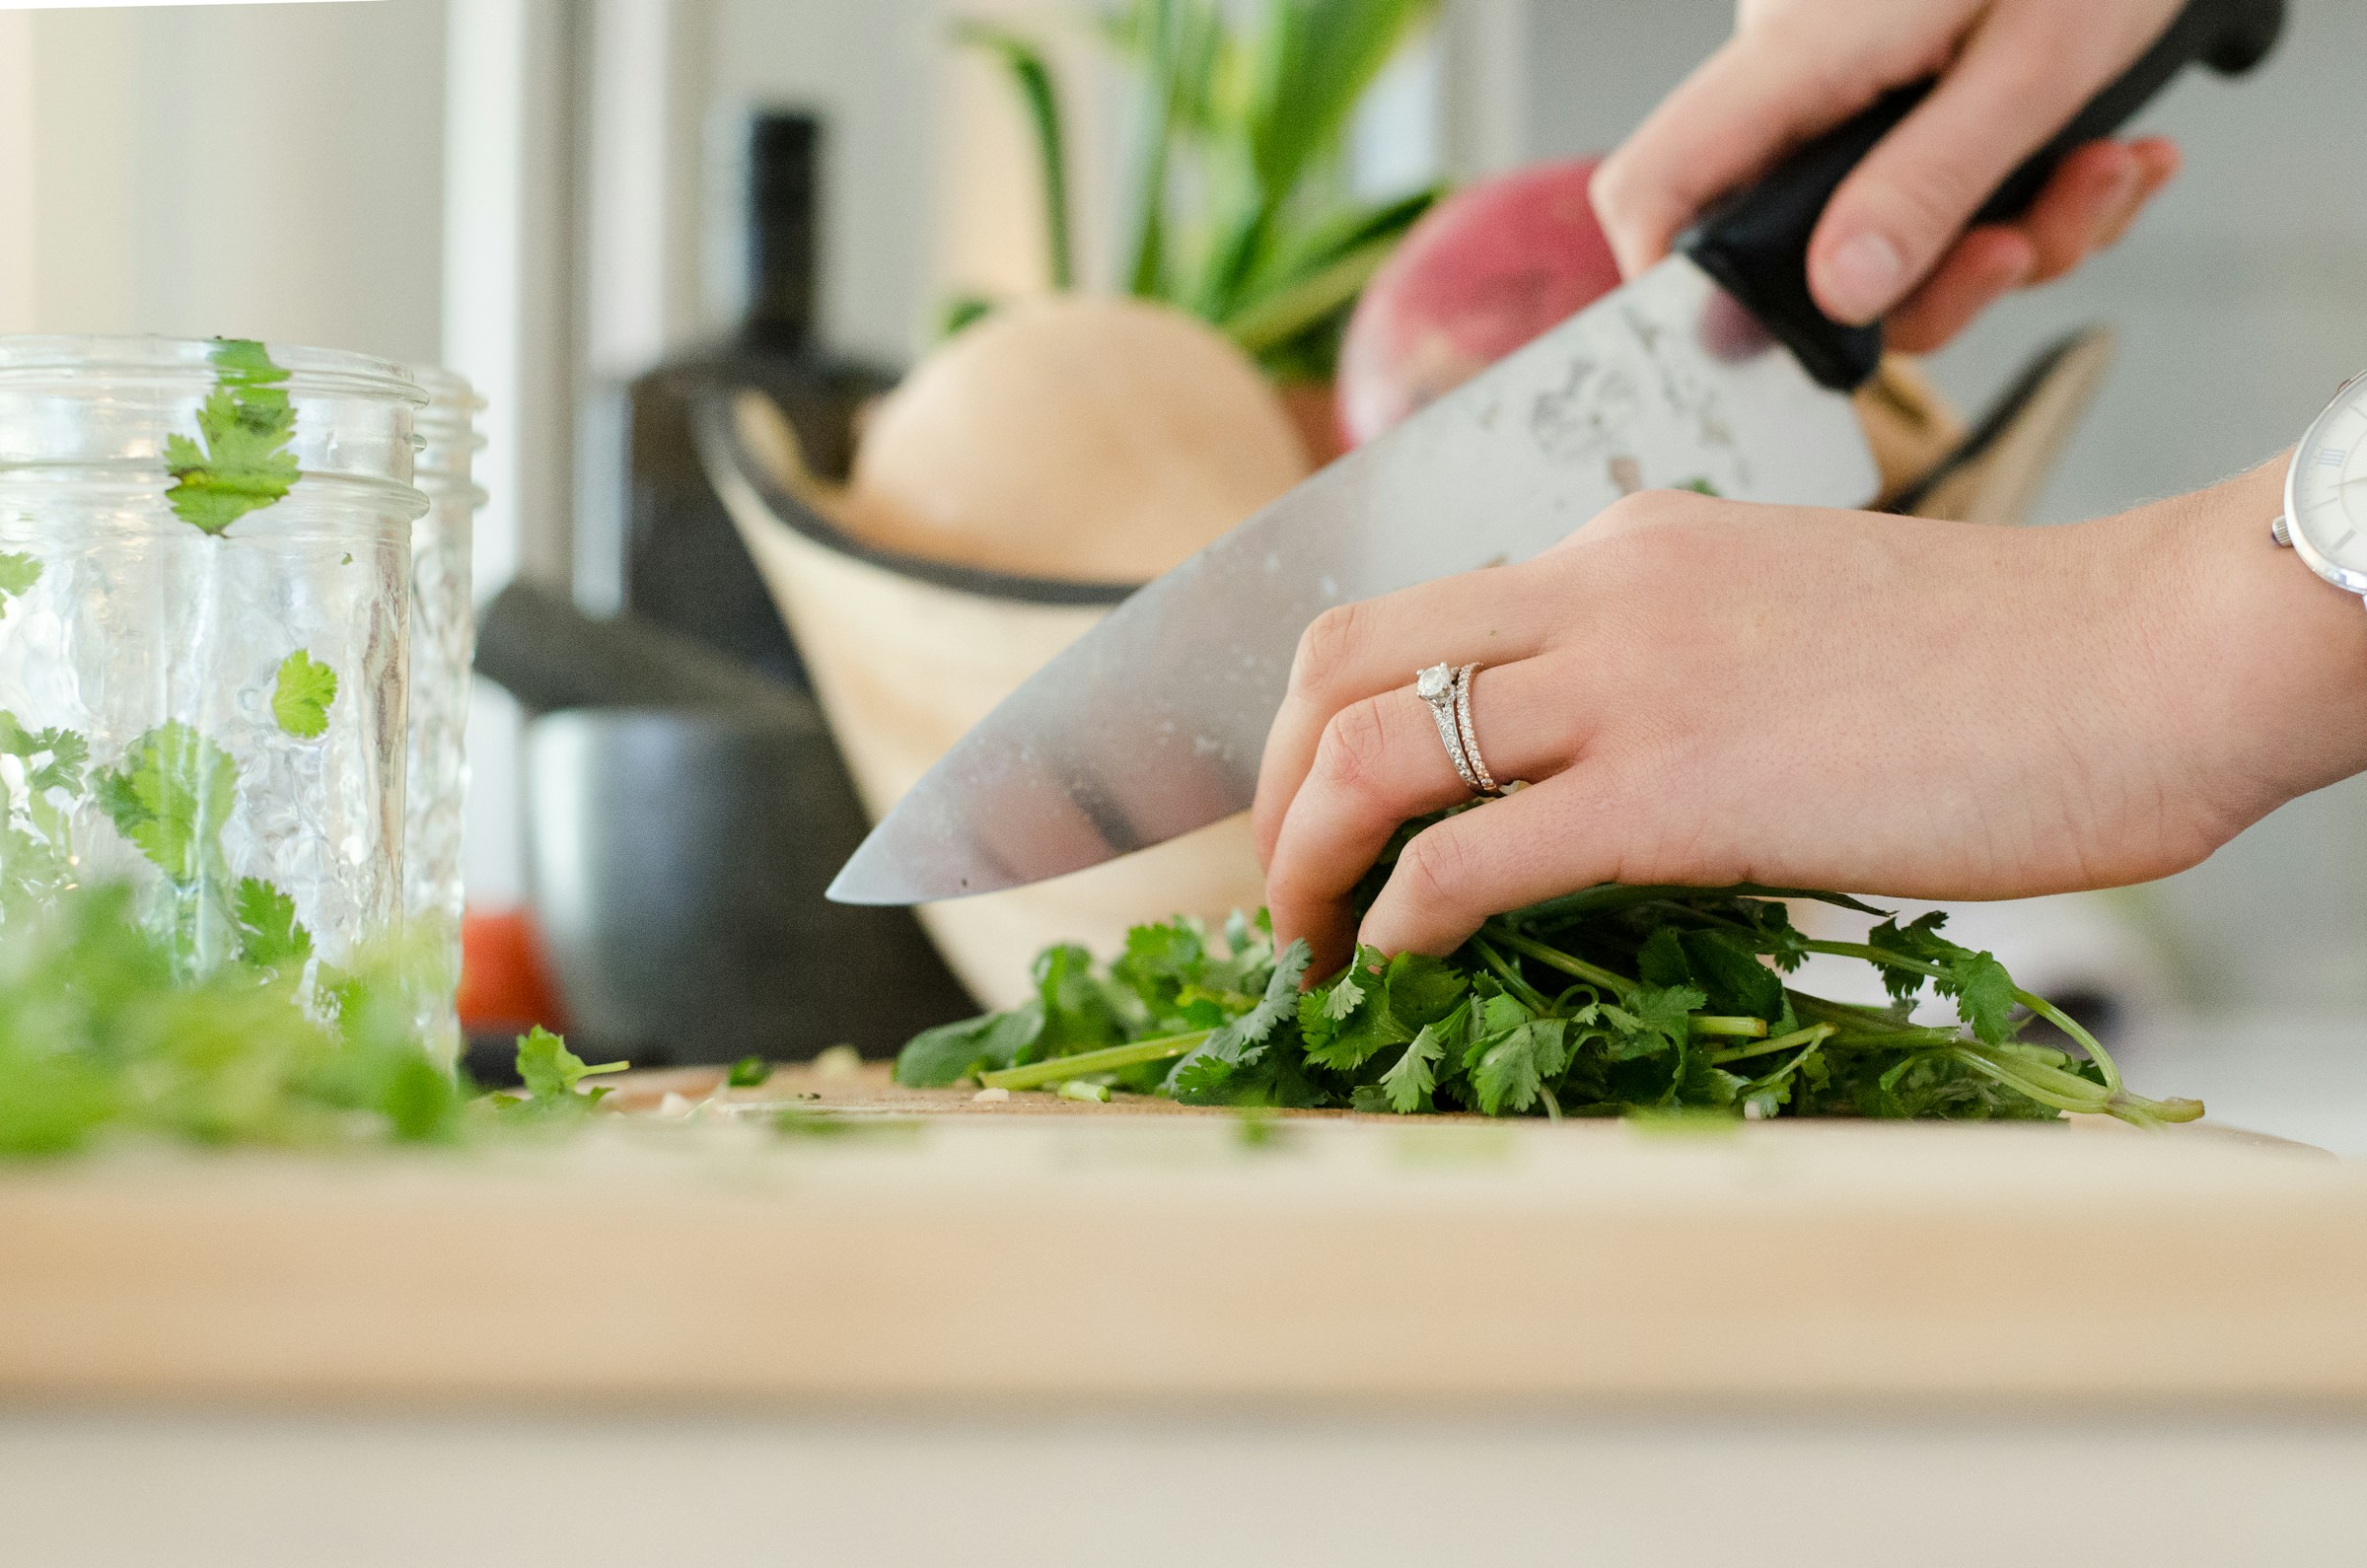 A woman cutting up herbs | Source: Unsplash